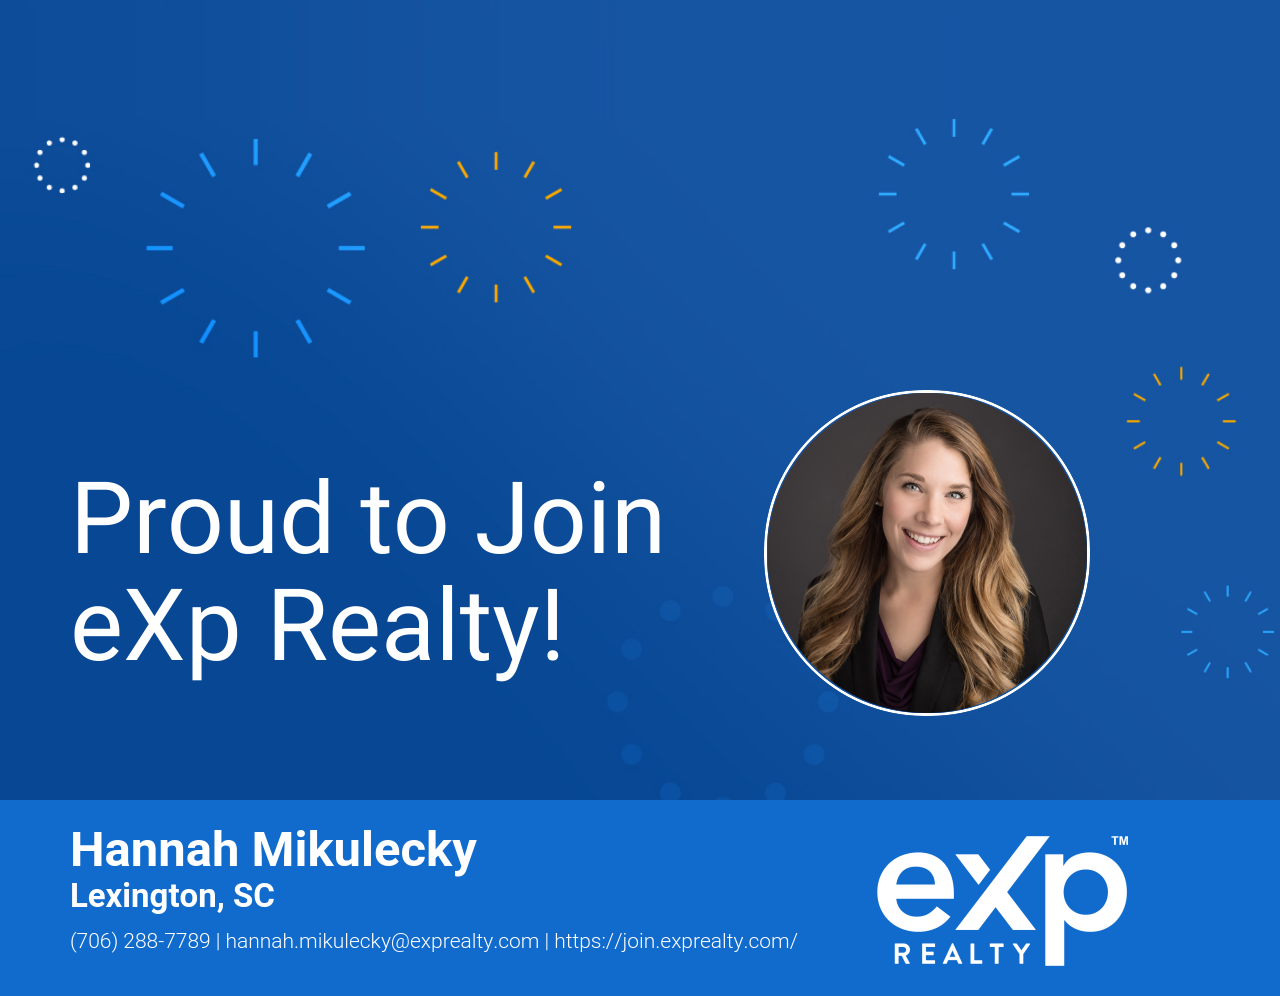 Hannah Mikulecky Joined eXp Realty!